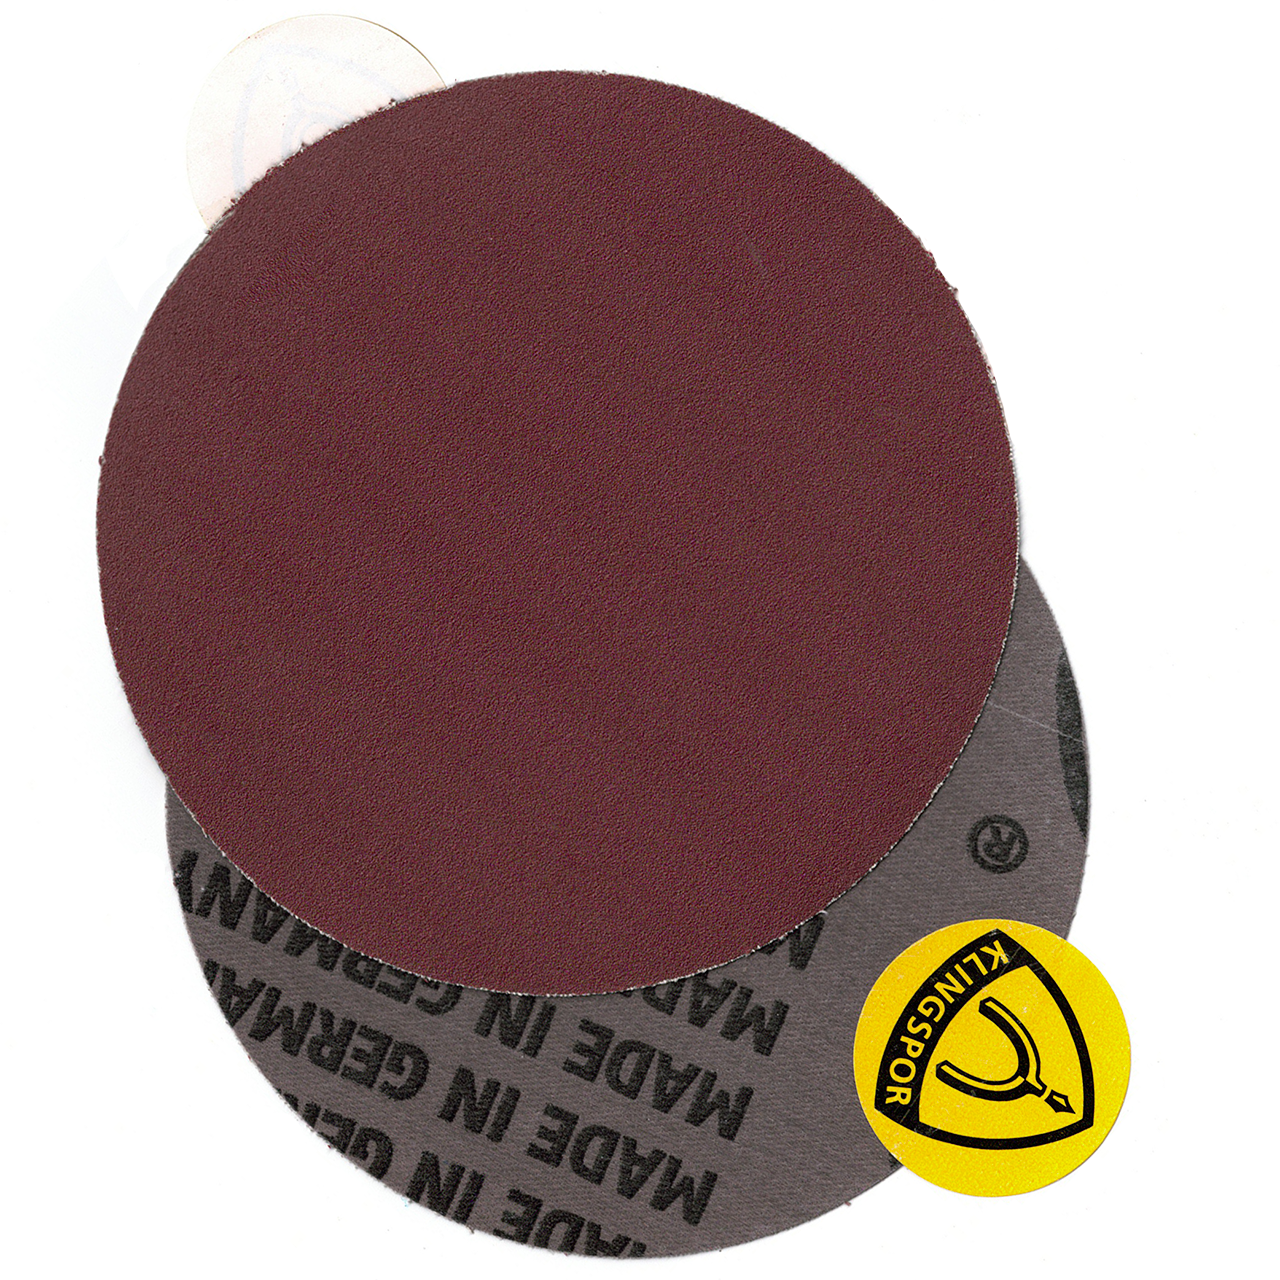 Klingspor Abrasives 5 Inch No Hole, Cloth Backed, Pressure Sensitive Adhesive, 40 Grit Discs, 5pk